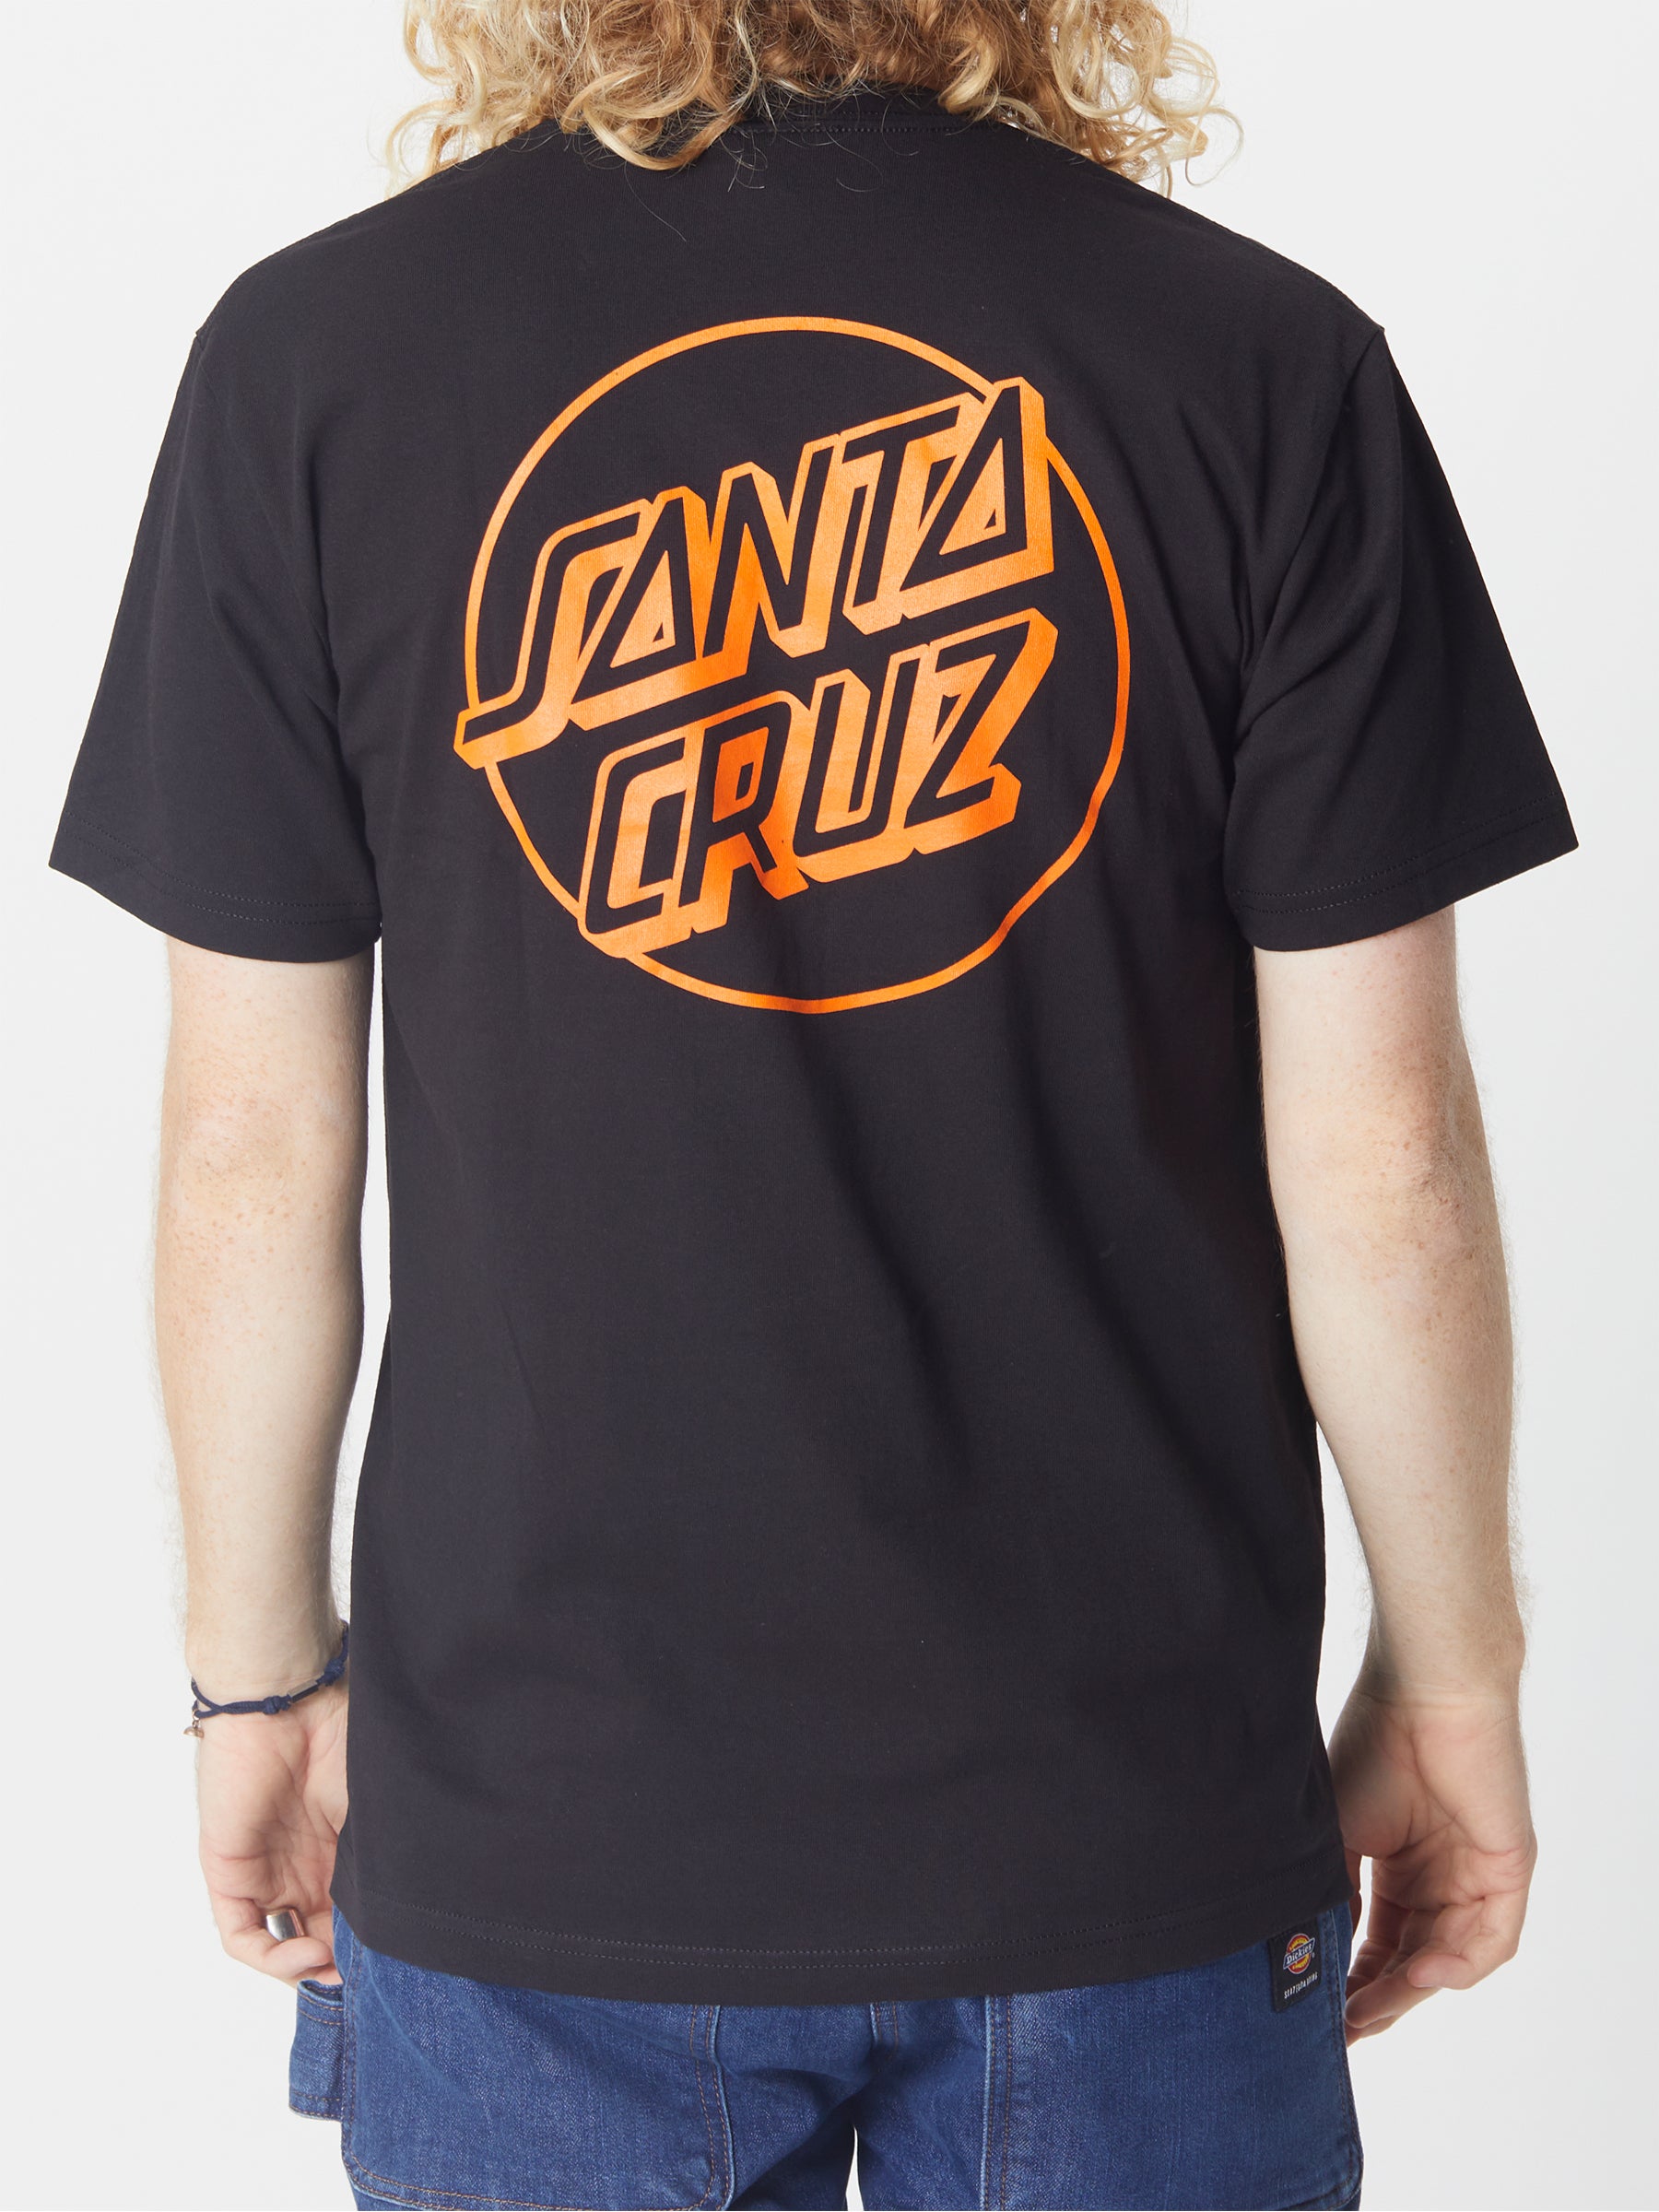 Santa Cruz Classic Opus Dot T-Shirt Tee Skateboard Black Ne 